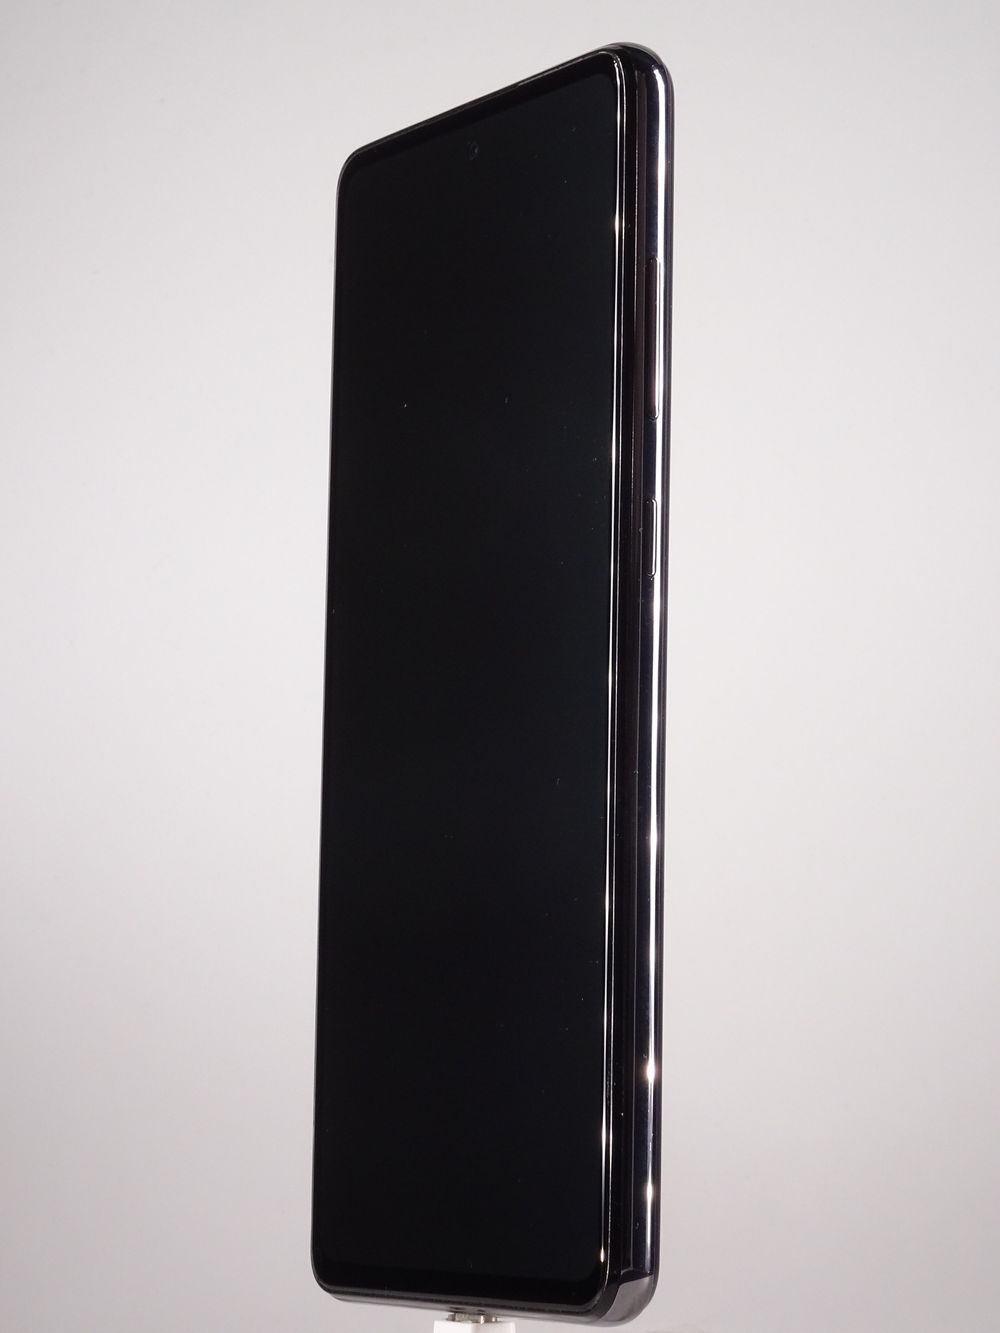 Telefon mobil Samsung Galaxy A72 Dual Sim, Black, 256 GB, Bun